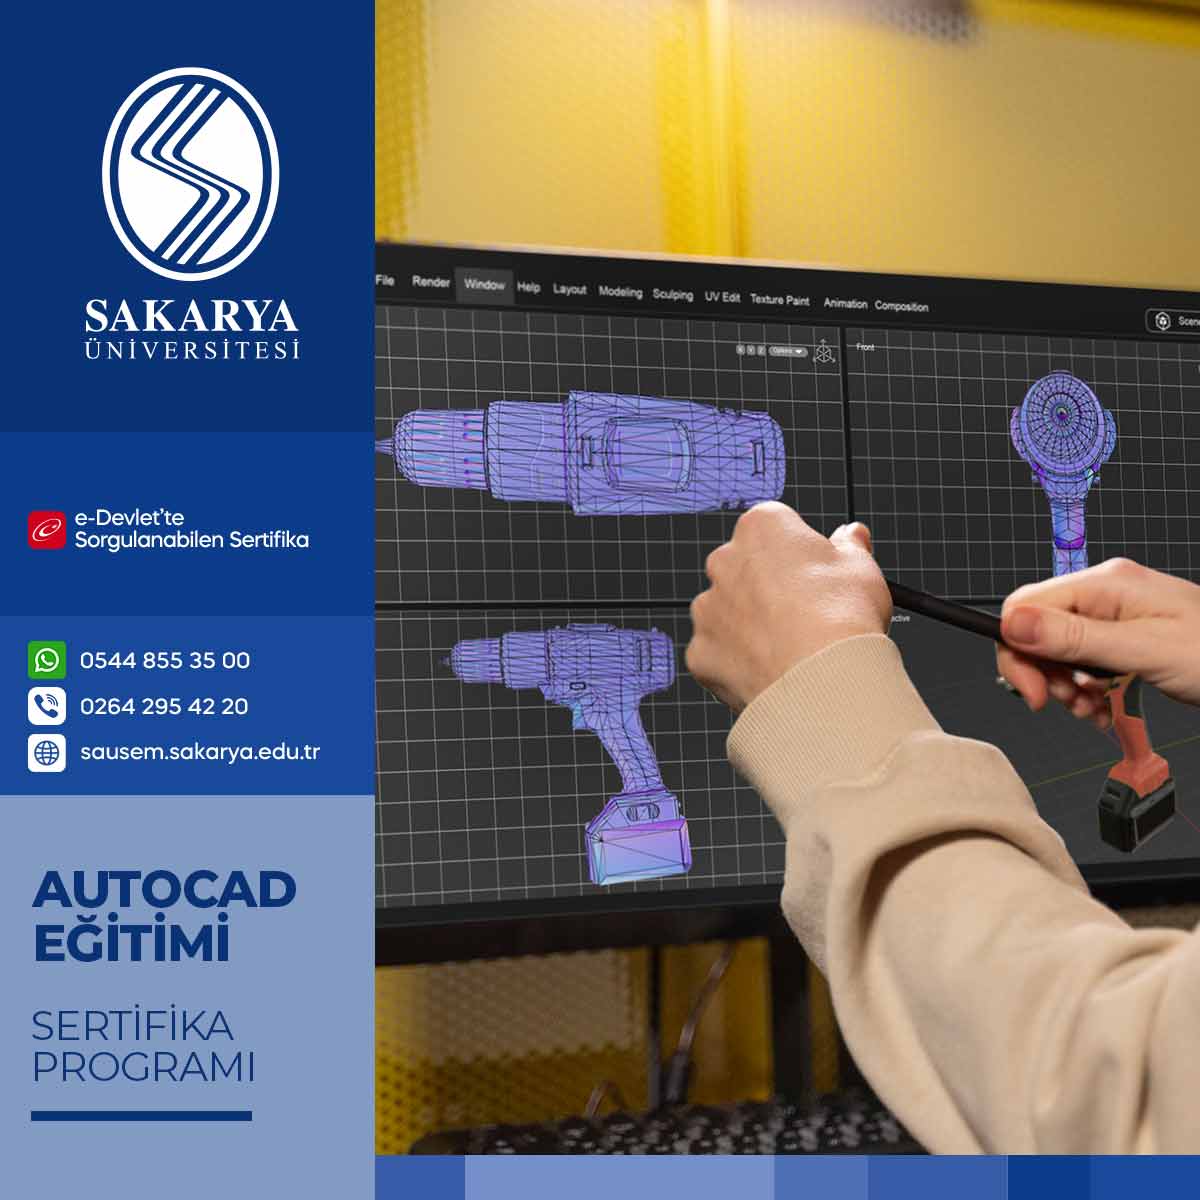 AutoCAD Eğitimi Sertifika Programı